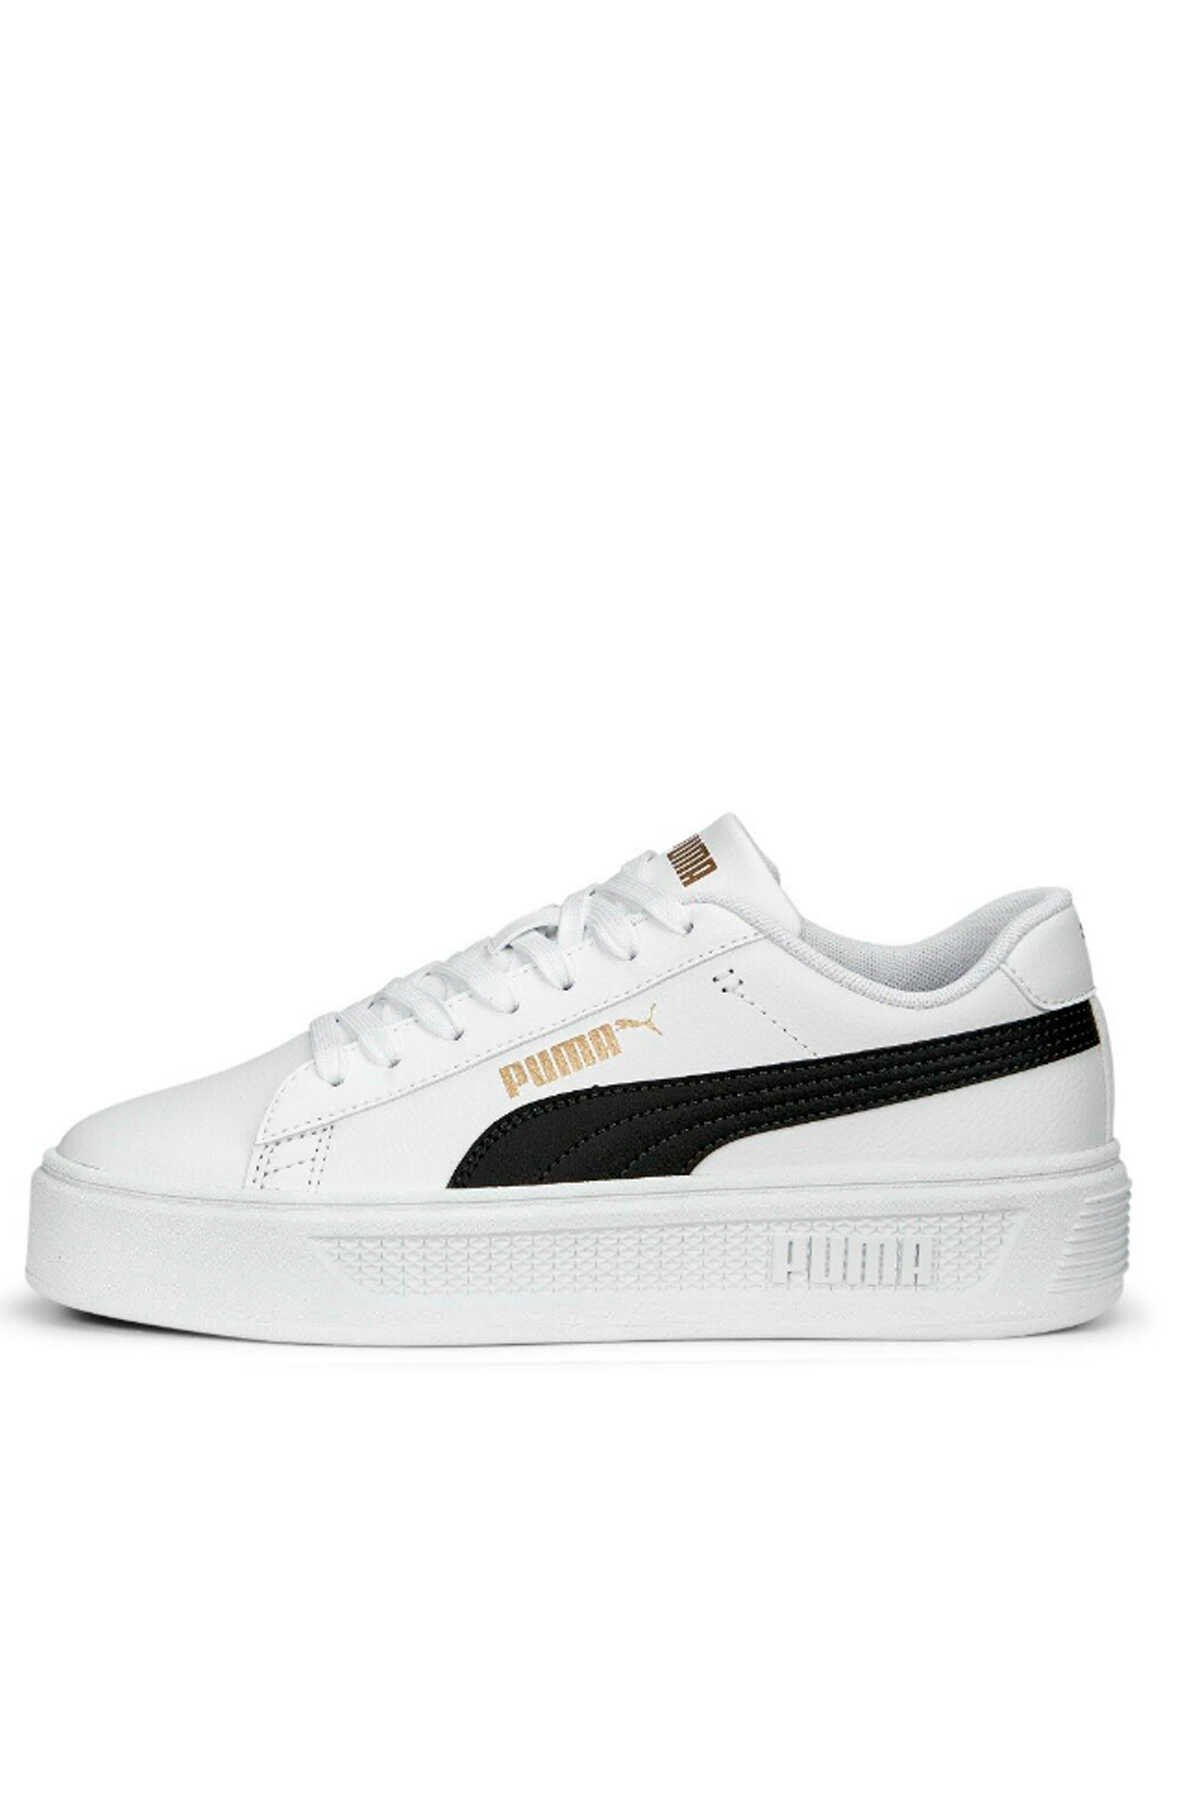 Puma - Puma Smash Platform Kadın Sneaker Ayakkabı Beyaz / Siyah